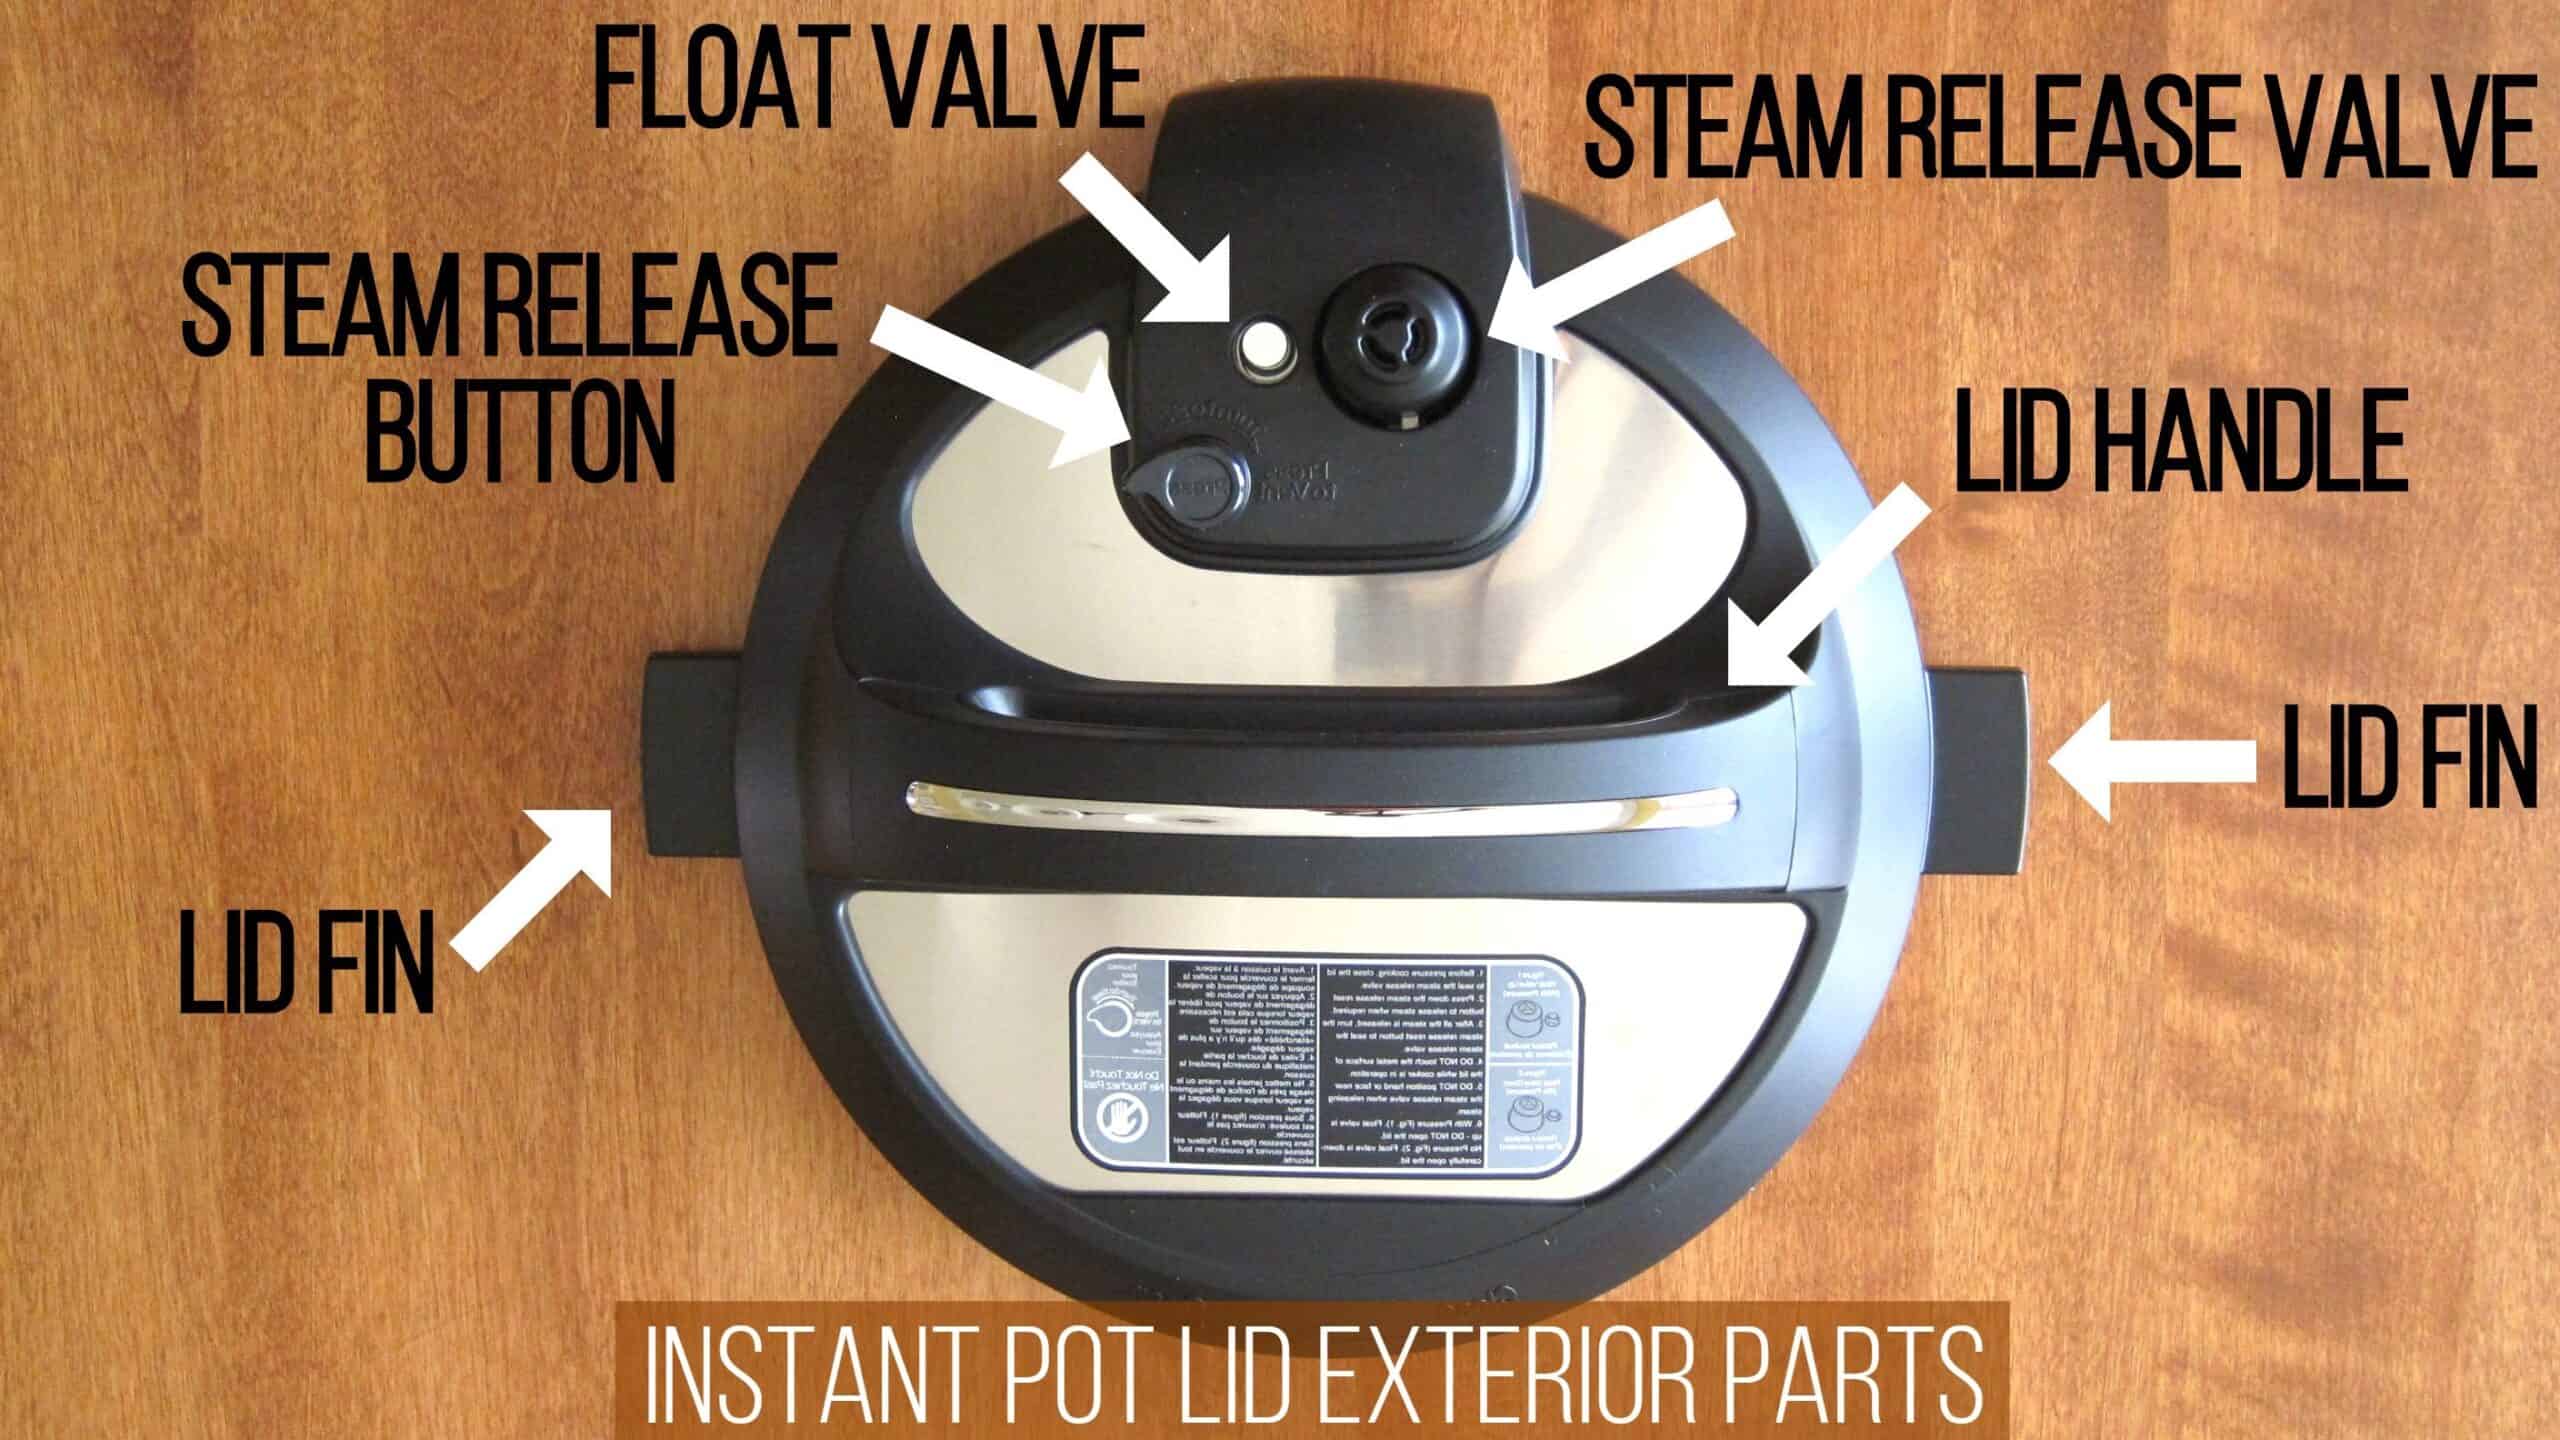 Instant Pot Duo lid exterior parts - lid fin, steam release button, float valve, steam release valve,lid handle, fin